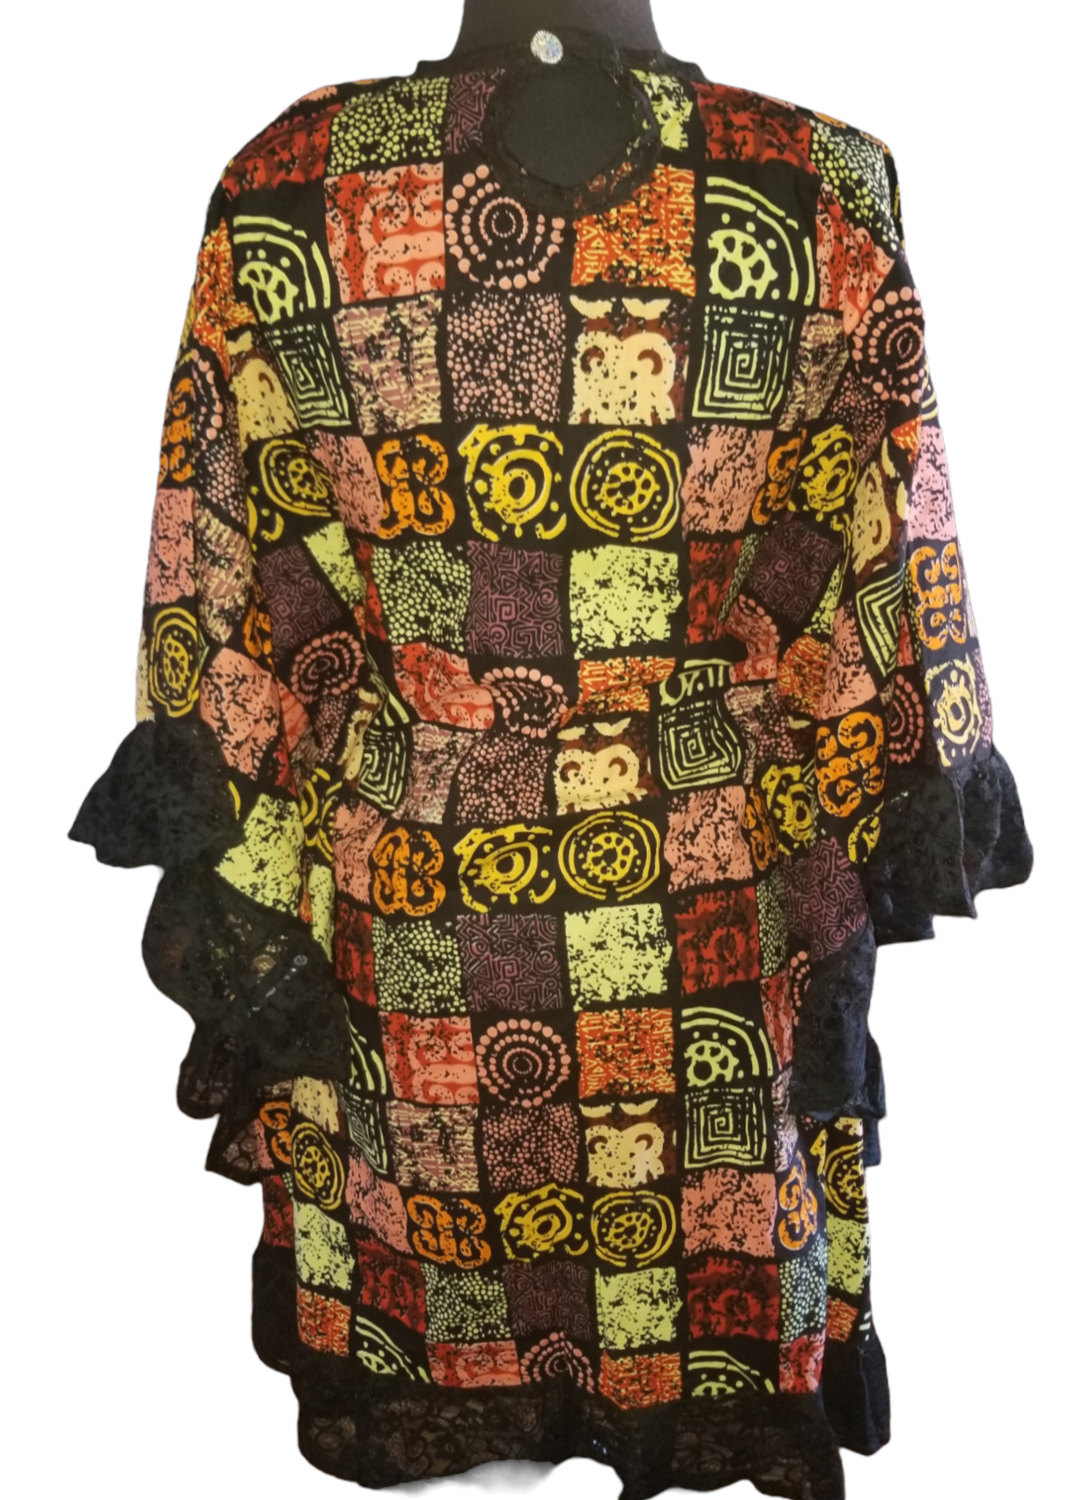 Morocco Lace Bat Wing Dress